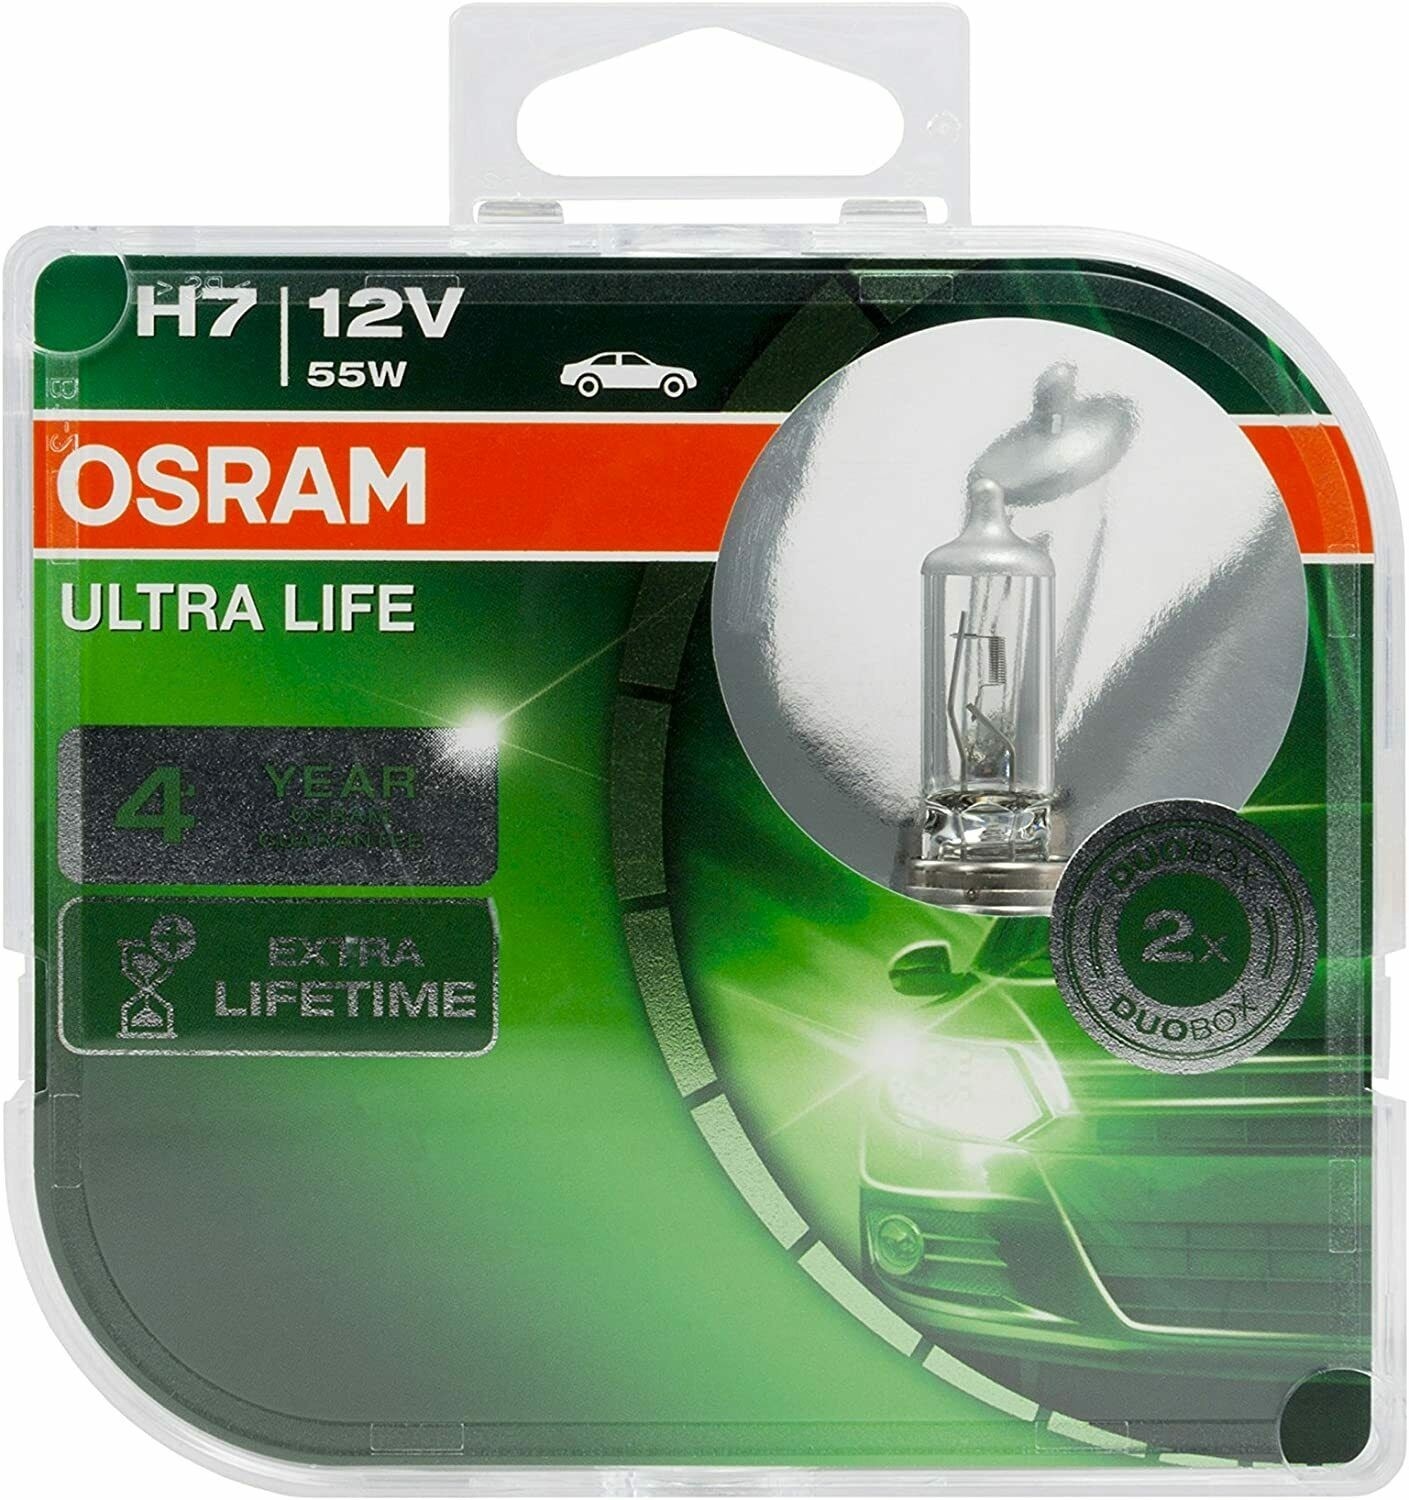 DUO BOX COPPIA DUE LAMPADINE OSRAM H7 12V ULTRA LIFE LUNGA DURATA